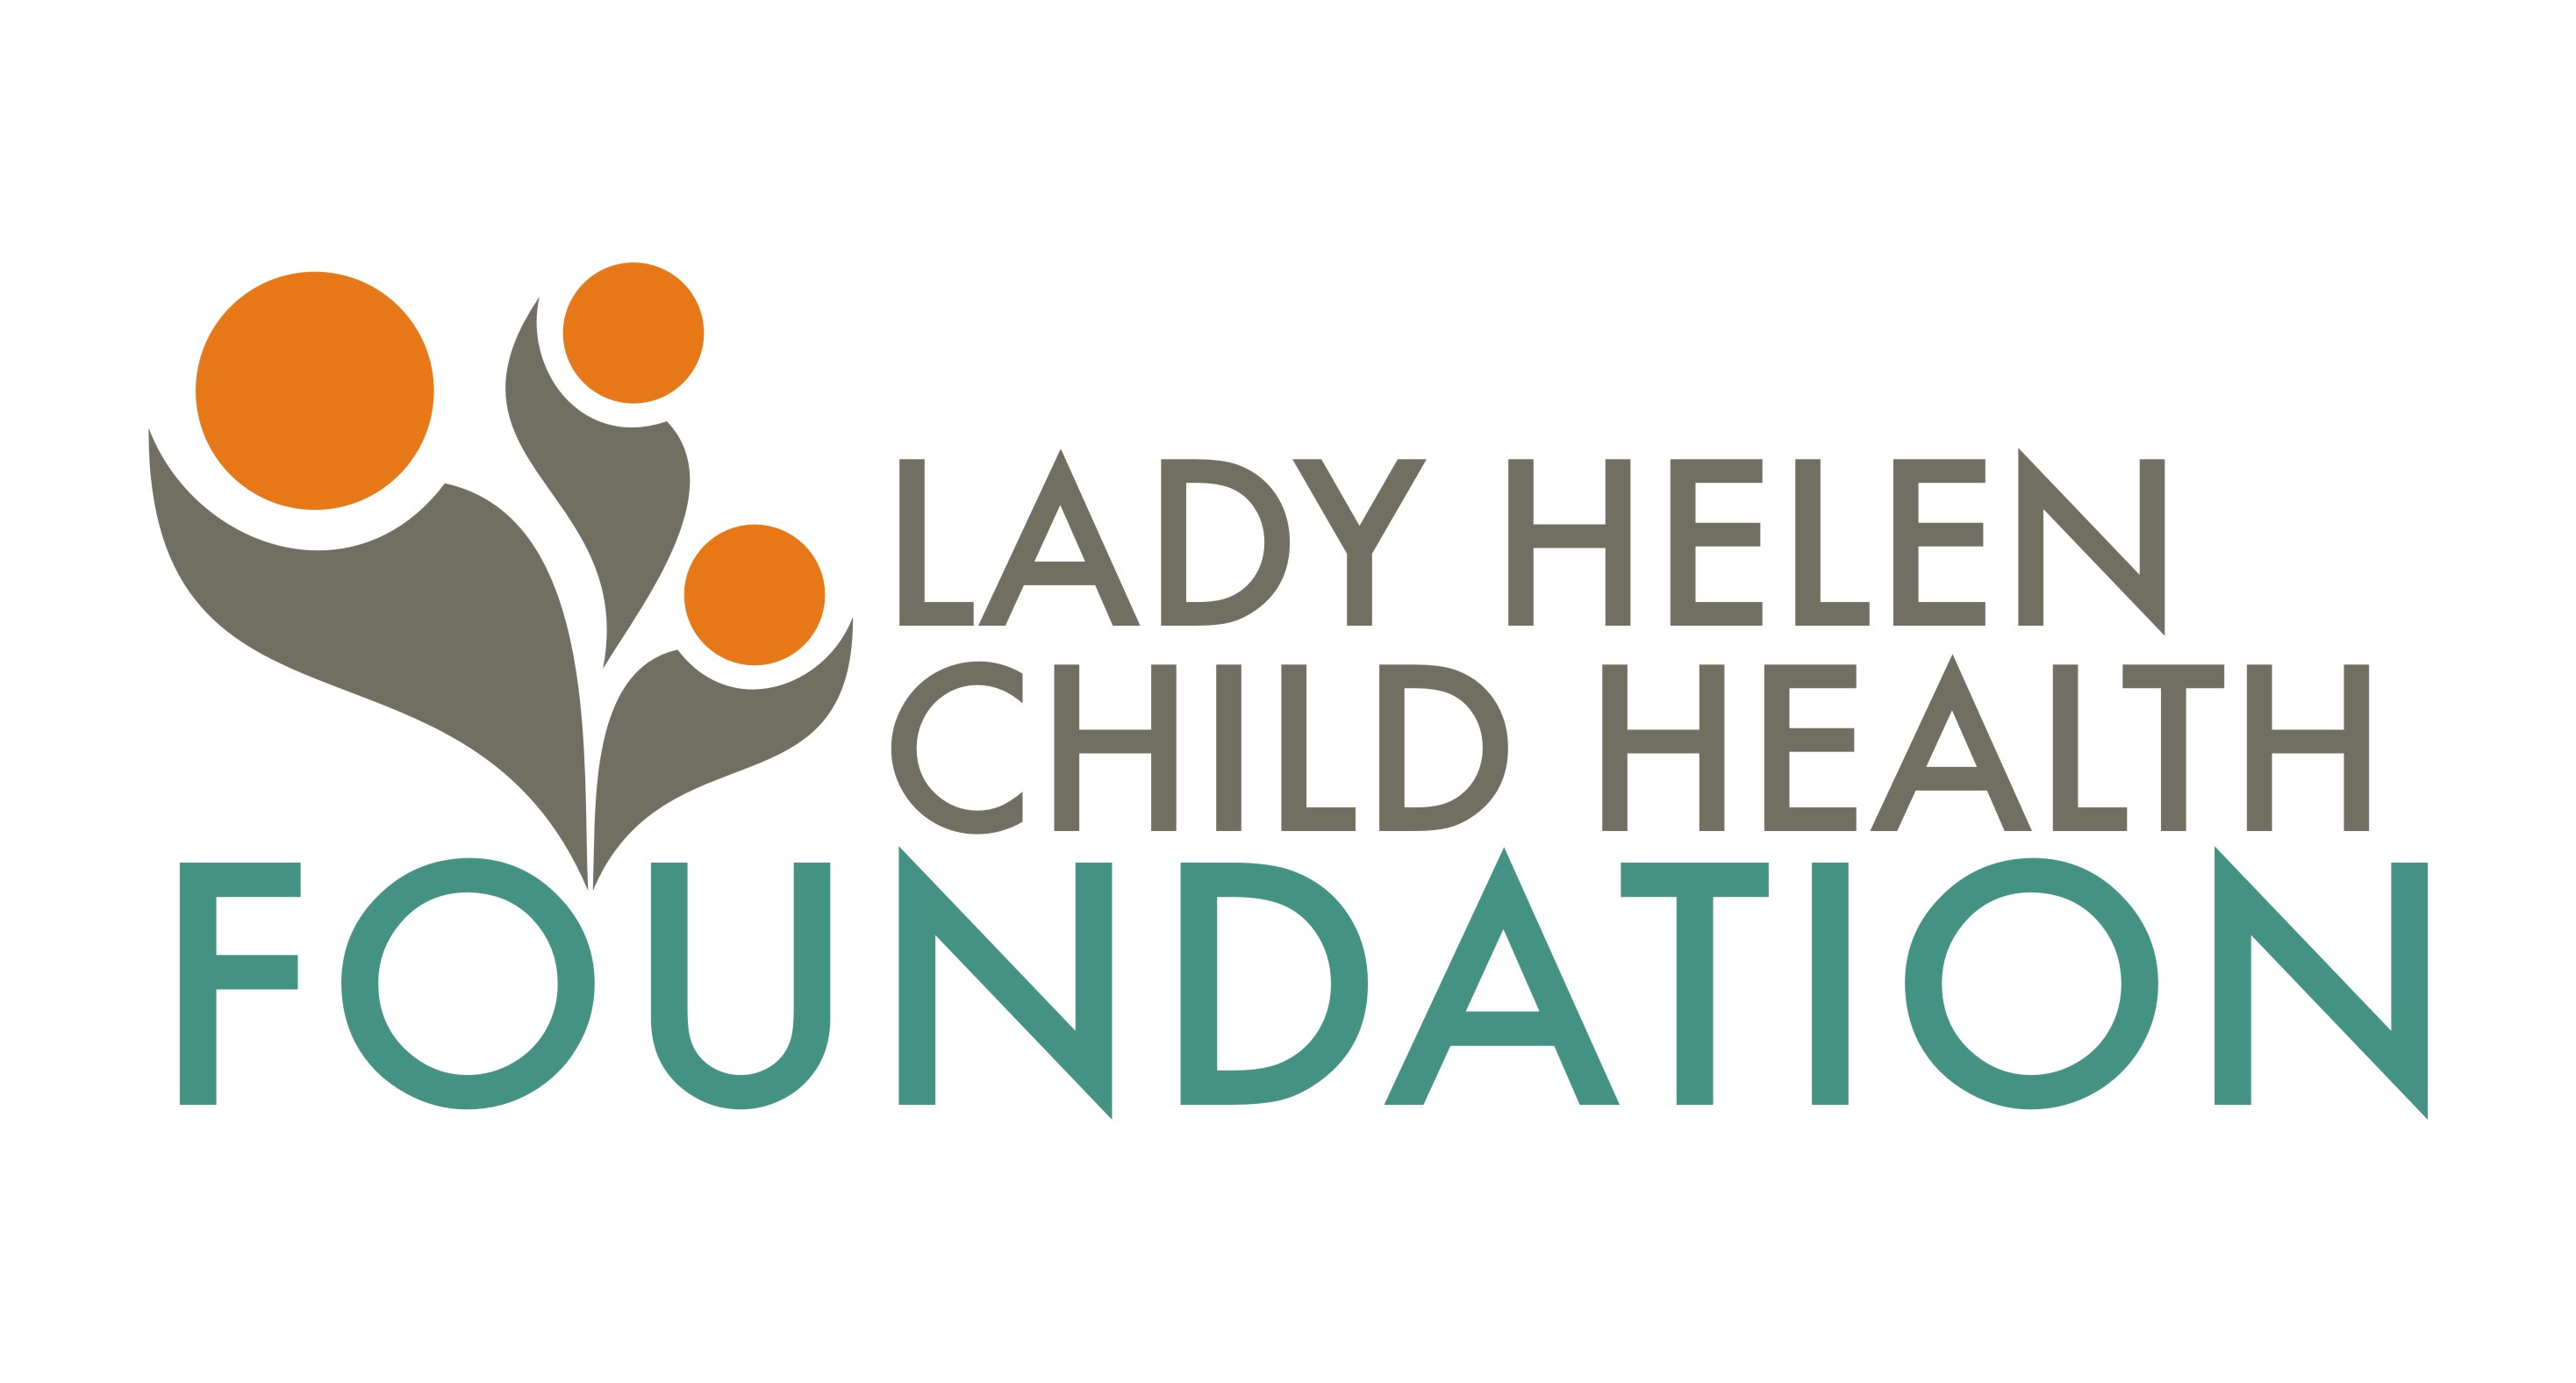 LADY HELEN CHILD HEALTH FOUNDATION